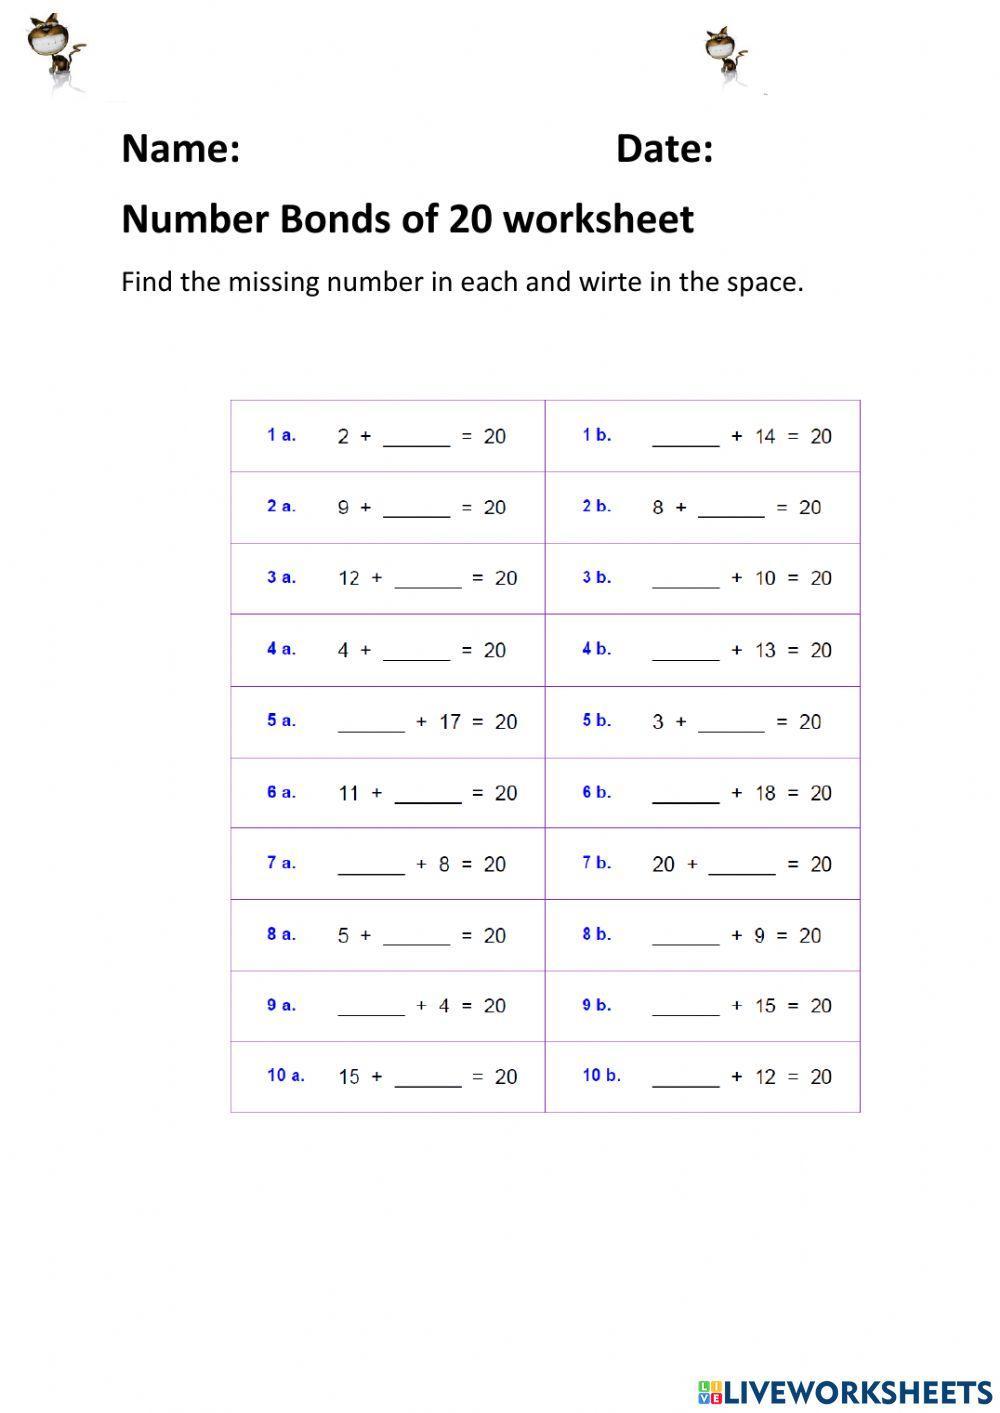 Number Bonds of 20